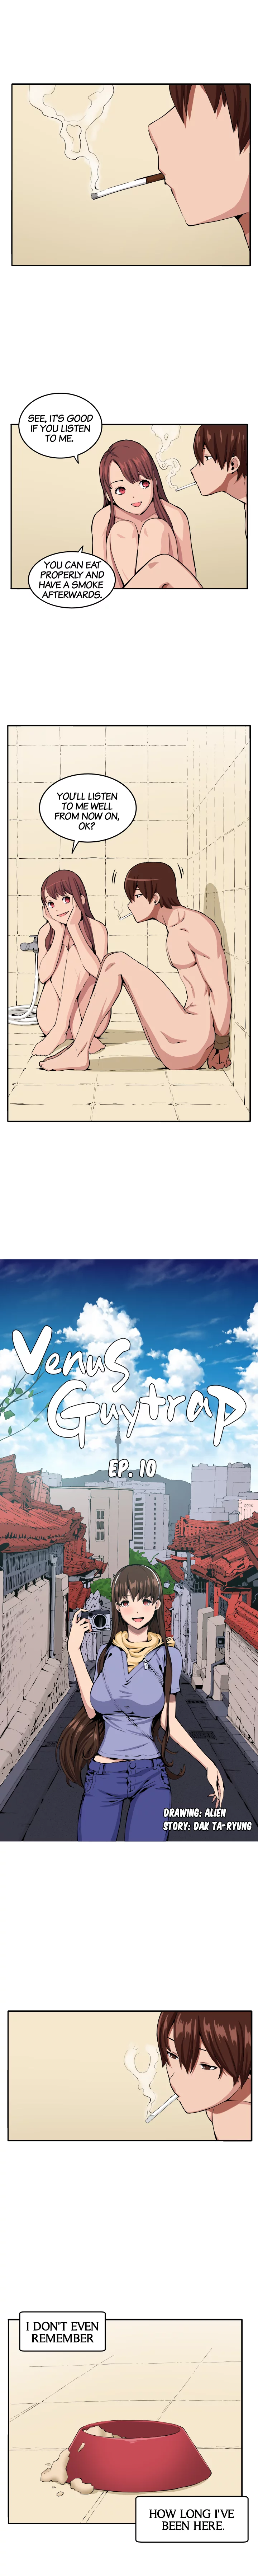 Venus Trap - Chapter 10 Page 1